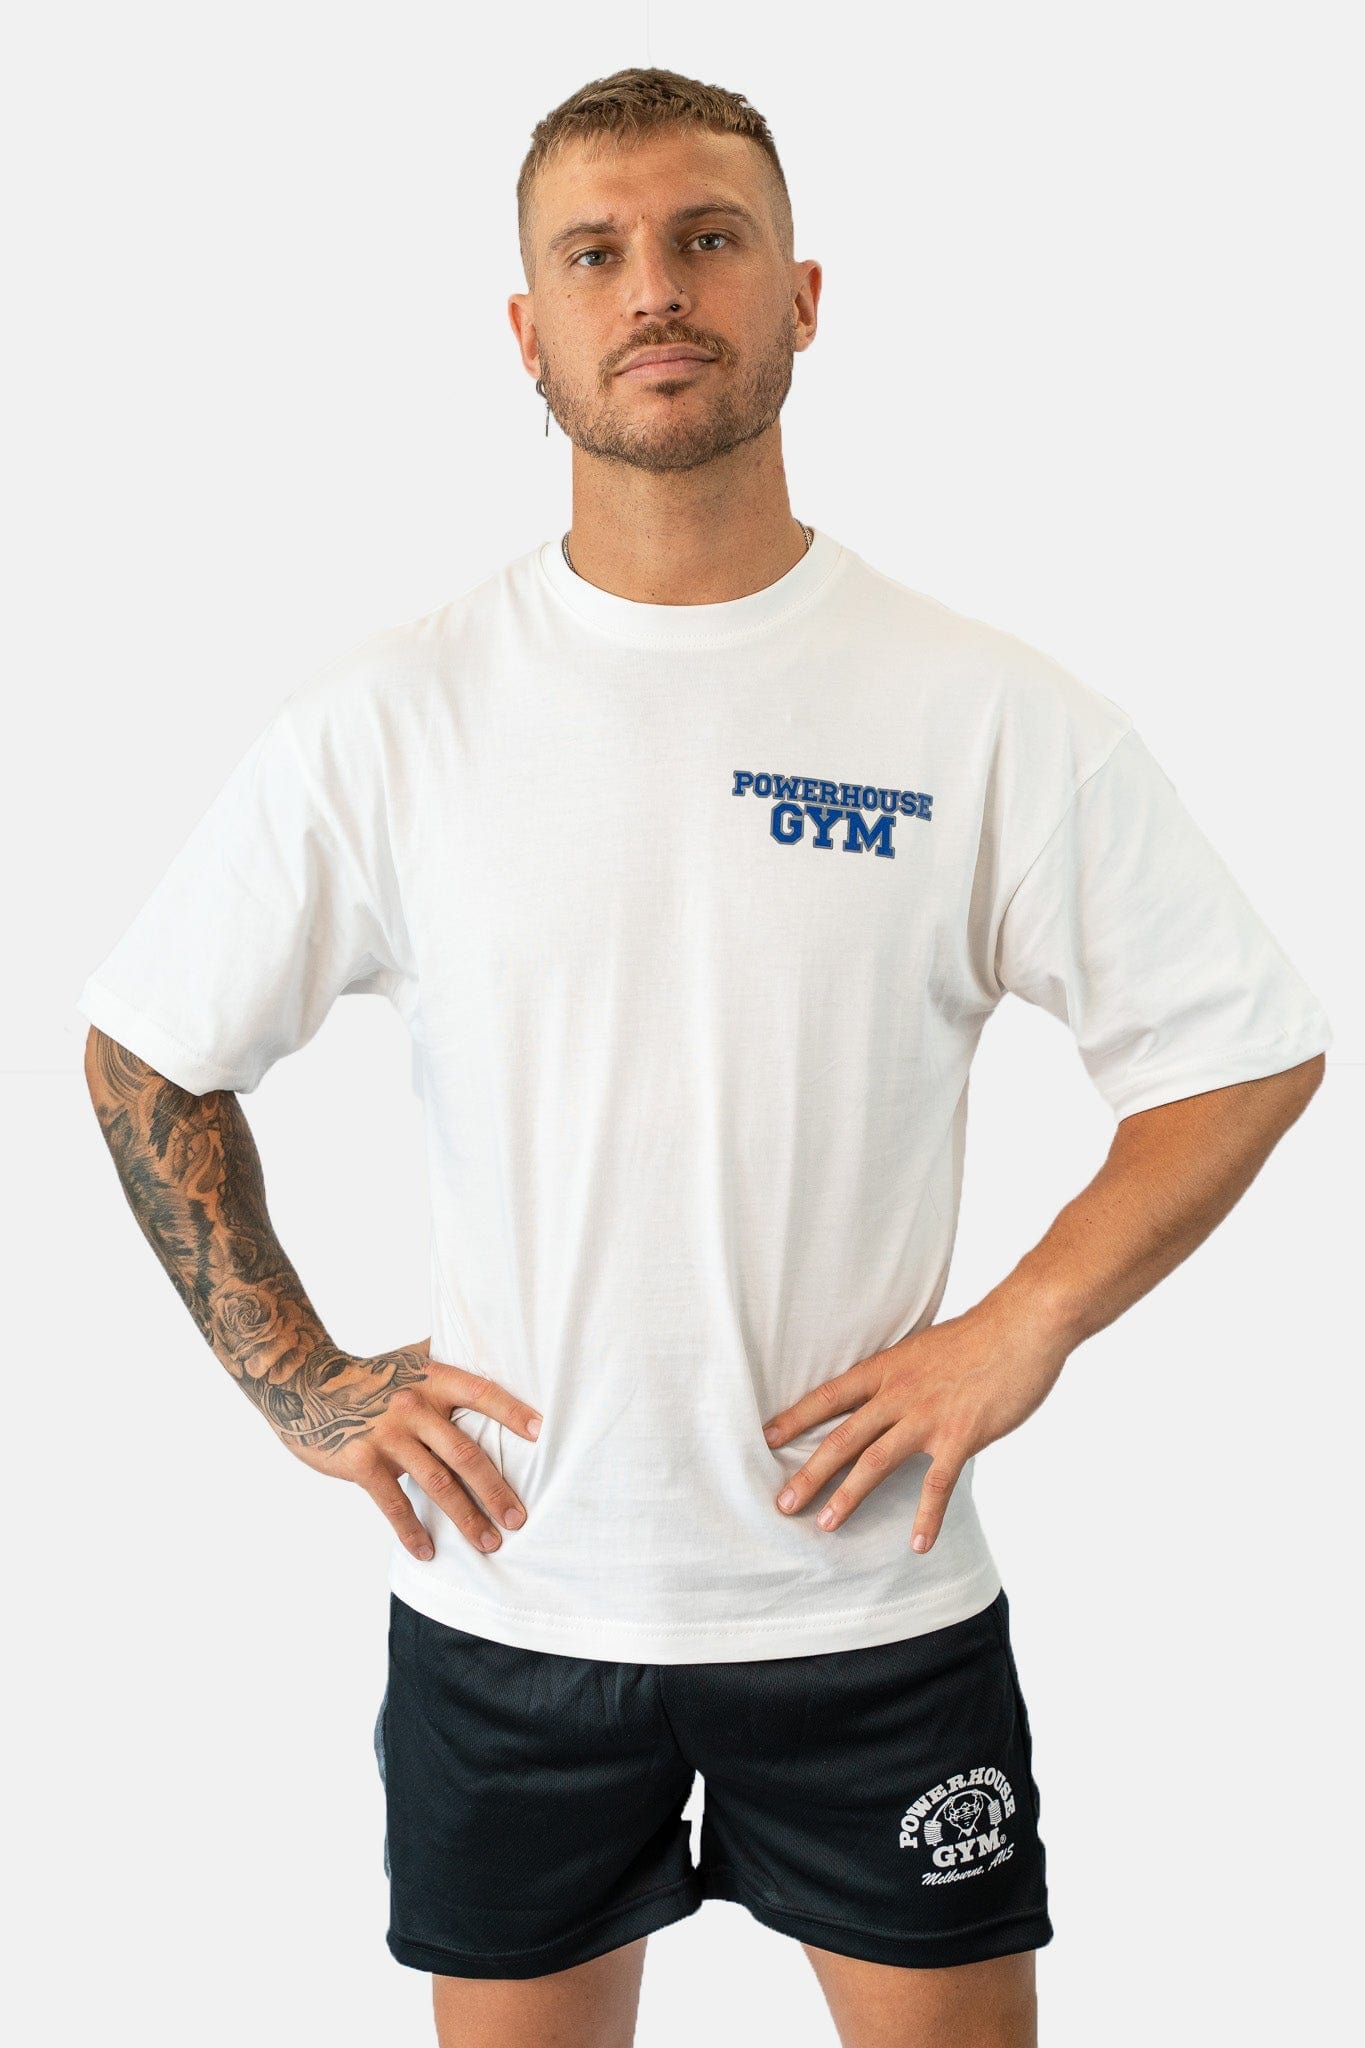 Powerhouse Gym Pro Shop Oversized Legend T-Shirt White/Blue